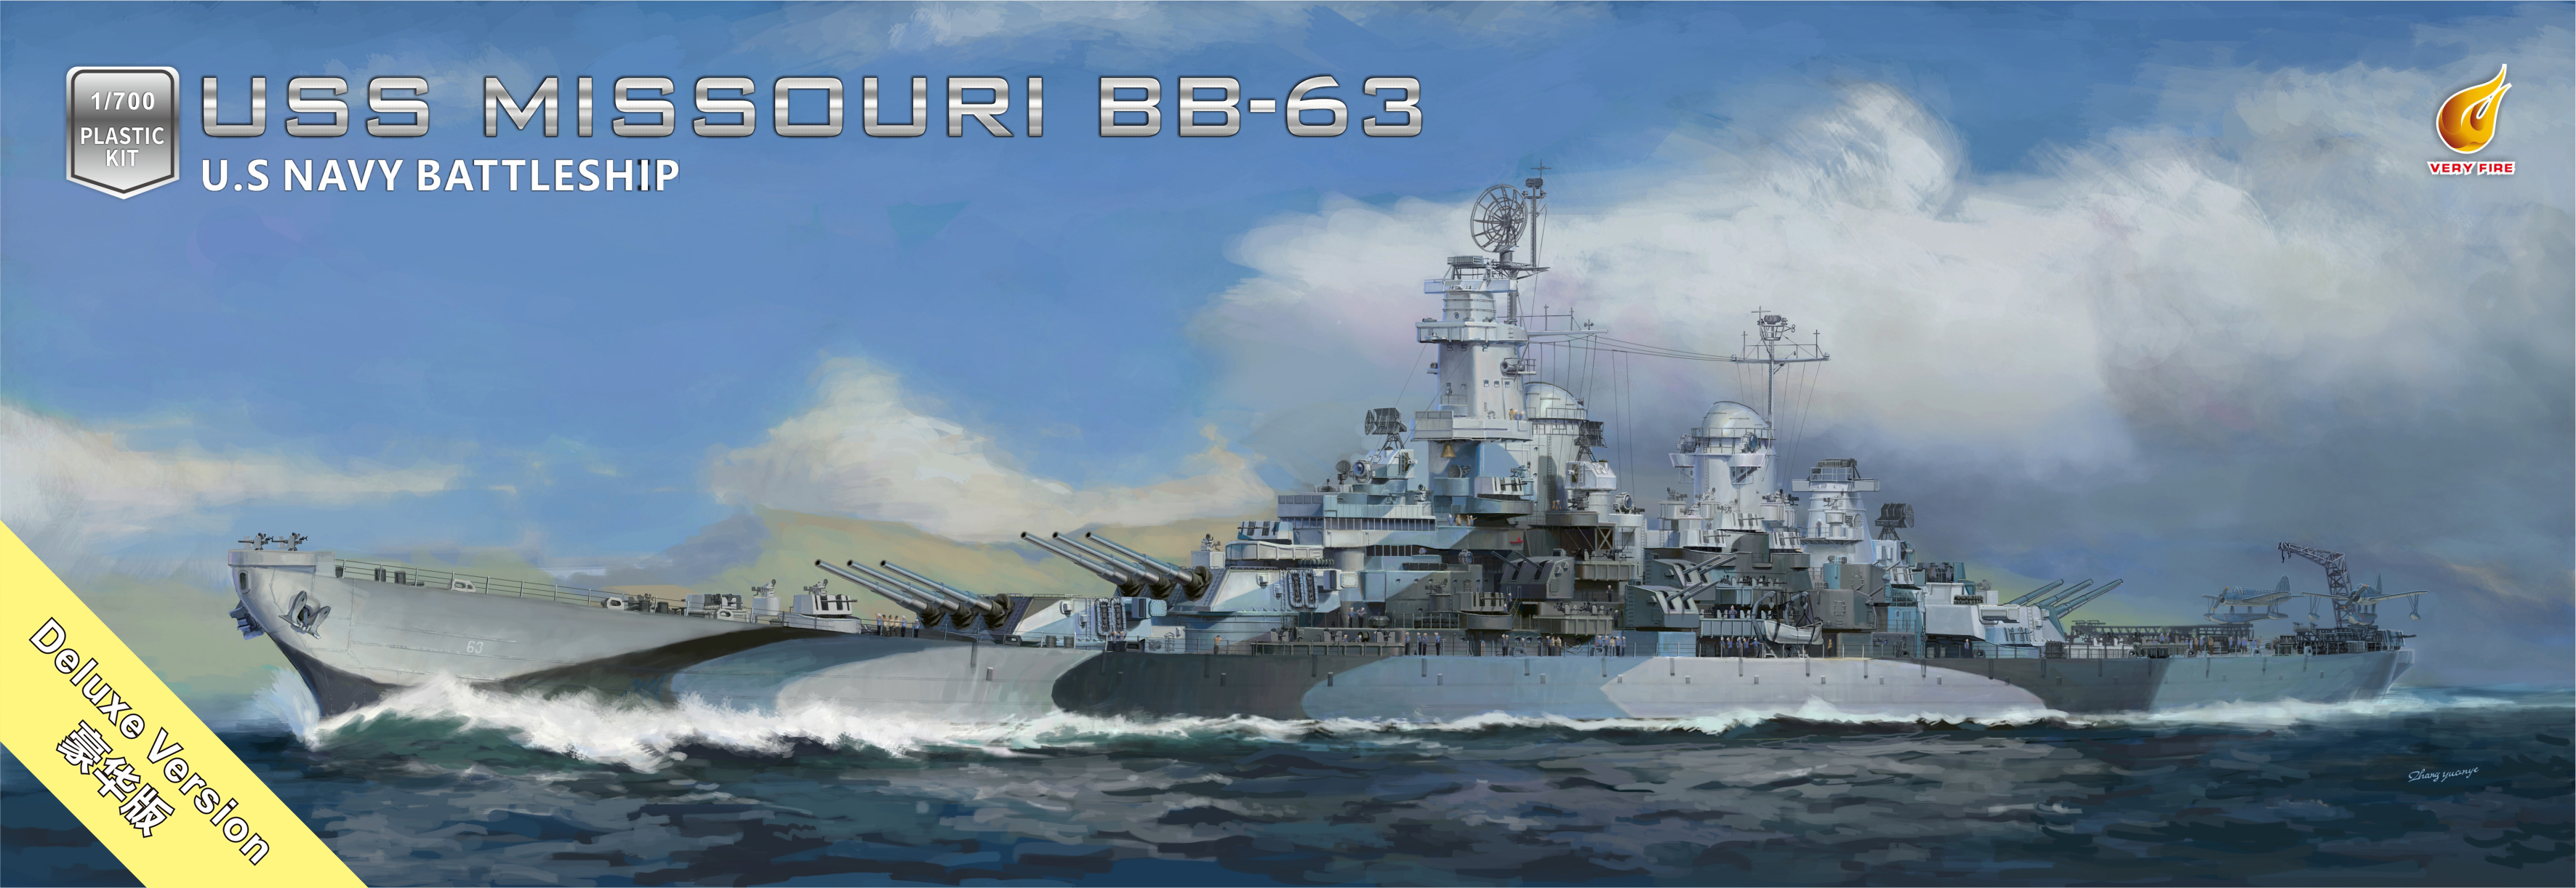 VF700909DX  флот  USS MISSOURI BB-63 (Deluxe Edition)  (1:700)